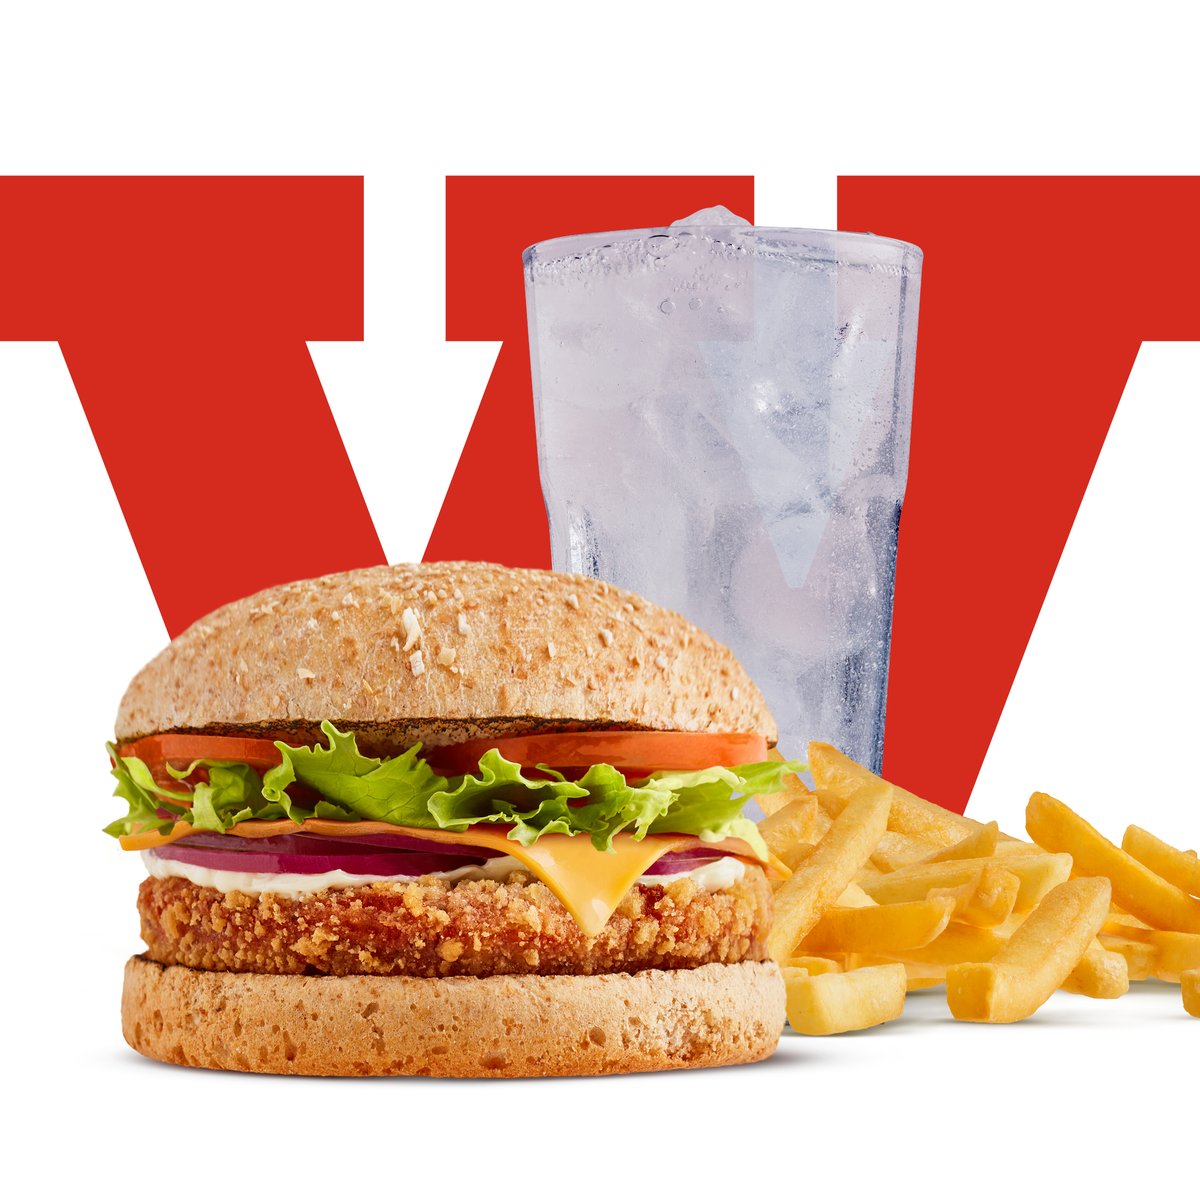 We’ve got great deals on Wimpy meals! #WimpyWednesday! Make my Wednesday a #WimpyWednesday - wimpy.uk.com/promotions/wim… *T&Cs apply #WimpyUK #WimpyWednesday #ComeOnOverToOurPlace #WimpyBurger #HomeOfTheHamburger #Burger #Chips